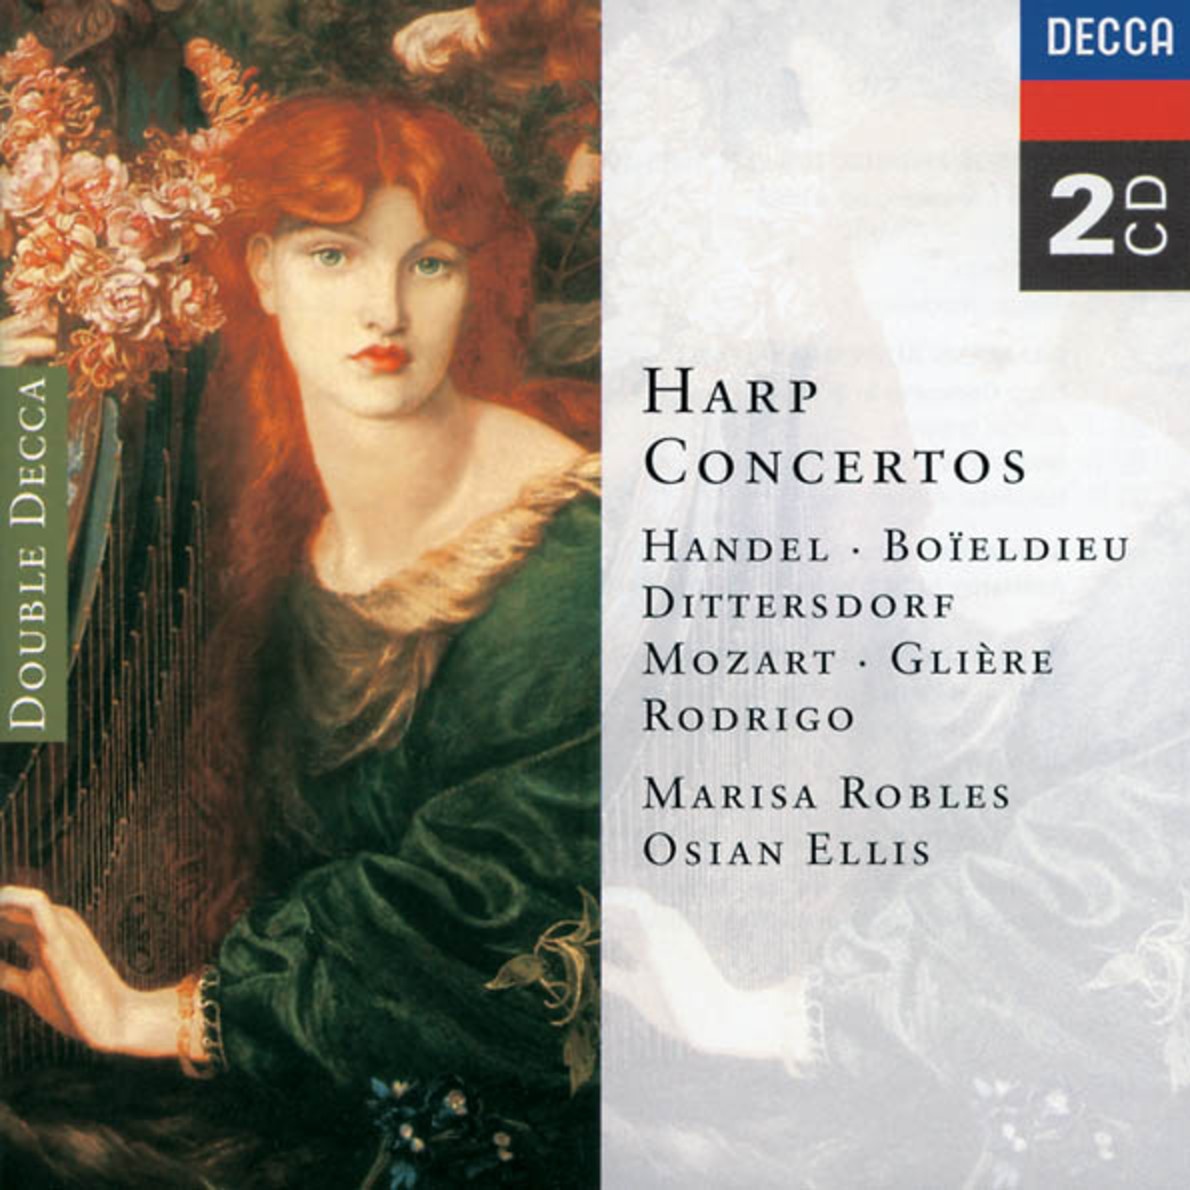 Concerto for Harp and Orchestra in C:2. Andante lento